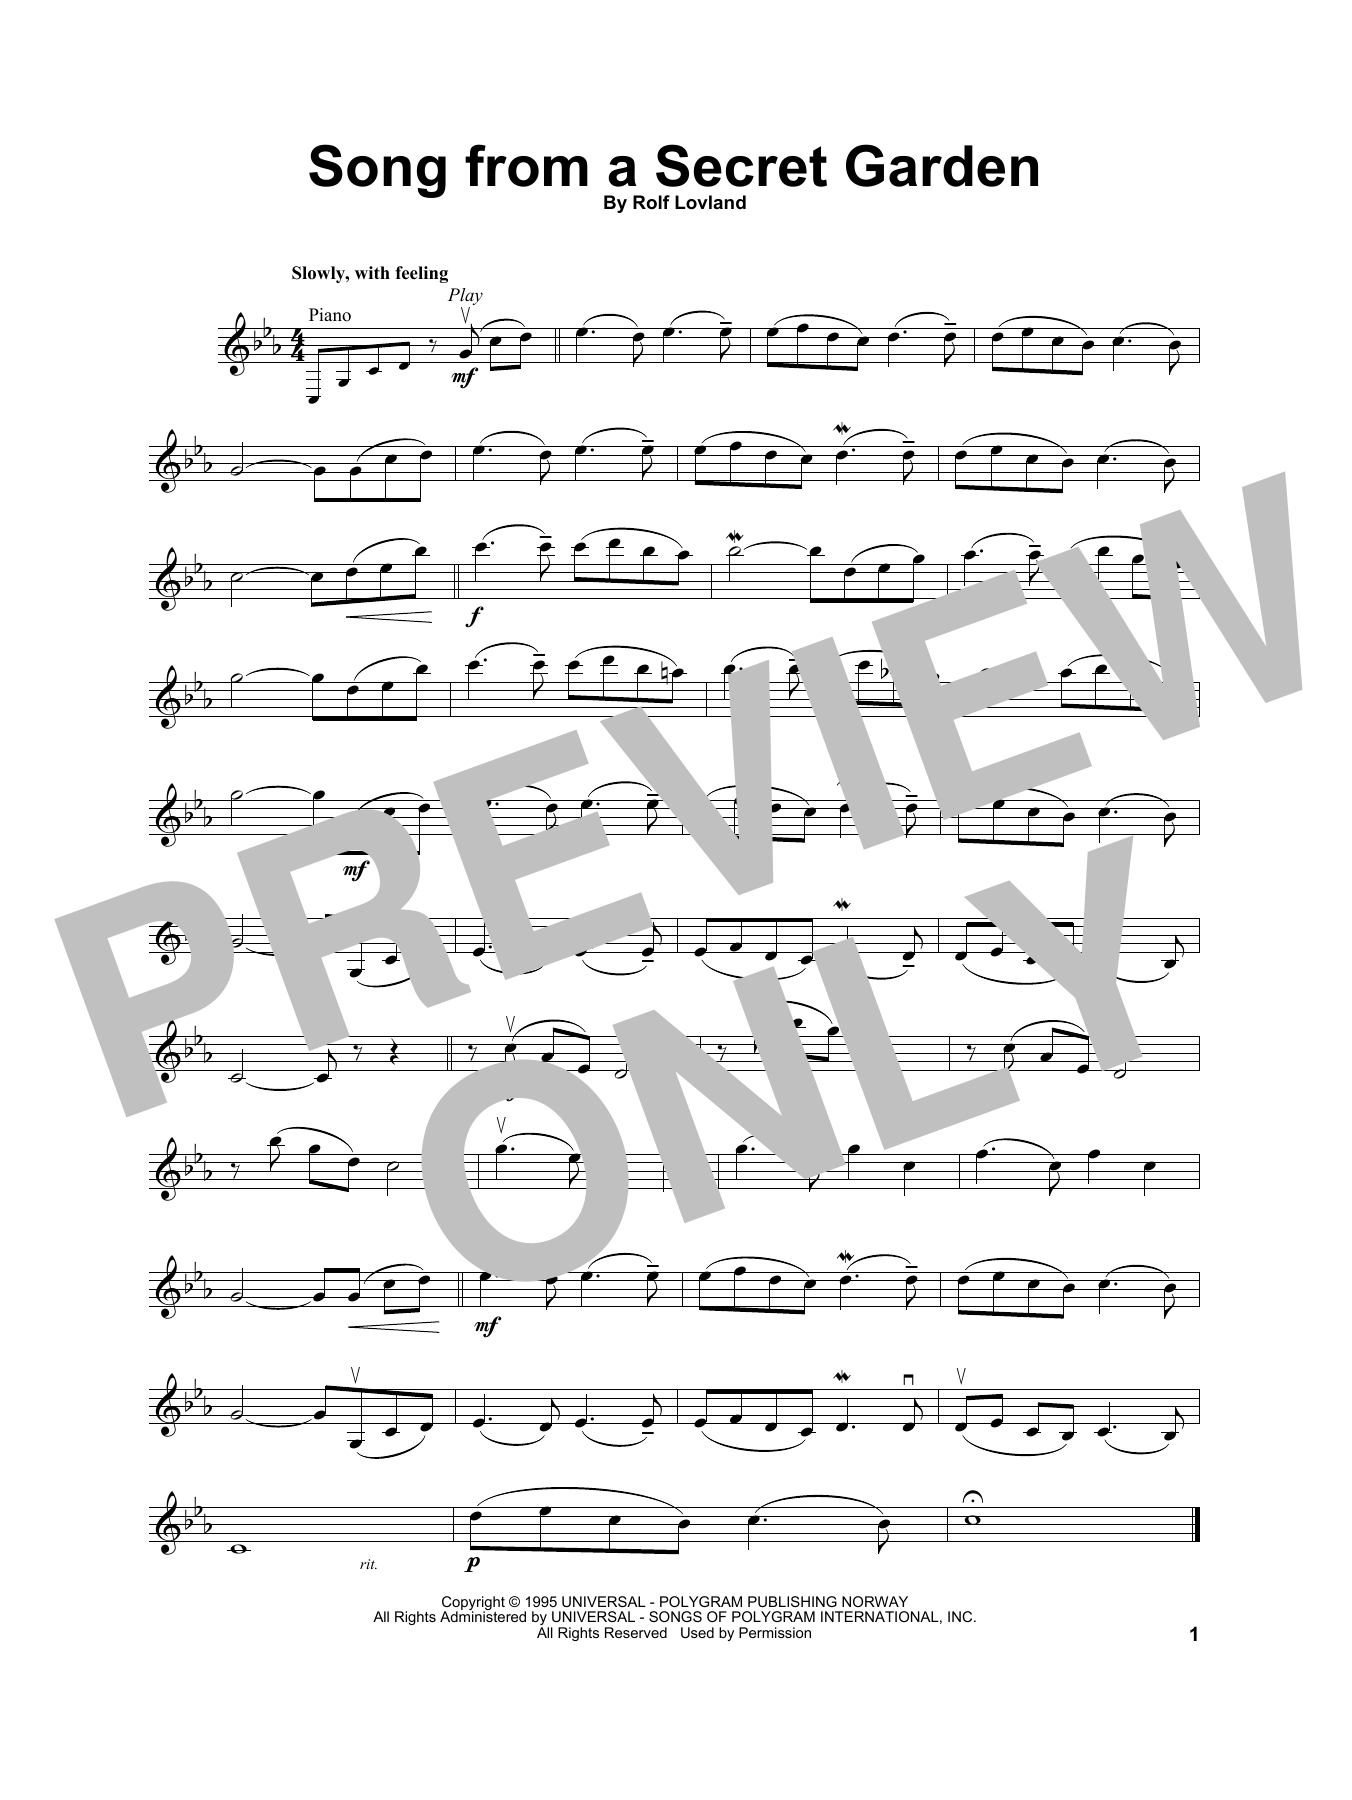 Secret Garden Song From A Secret Garden Sheet Music Notes & Chords for Recorder Solo - Download or Print PDF